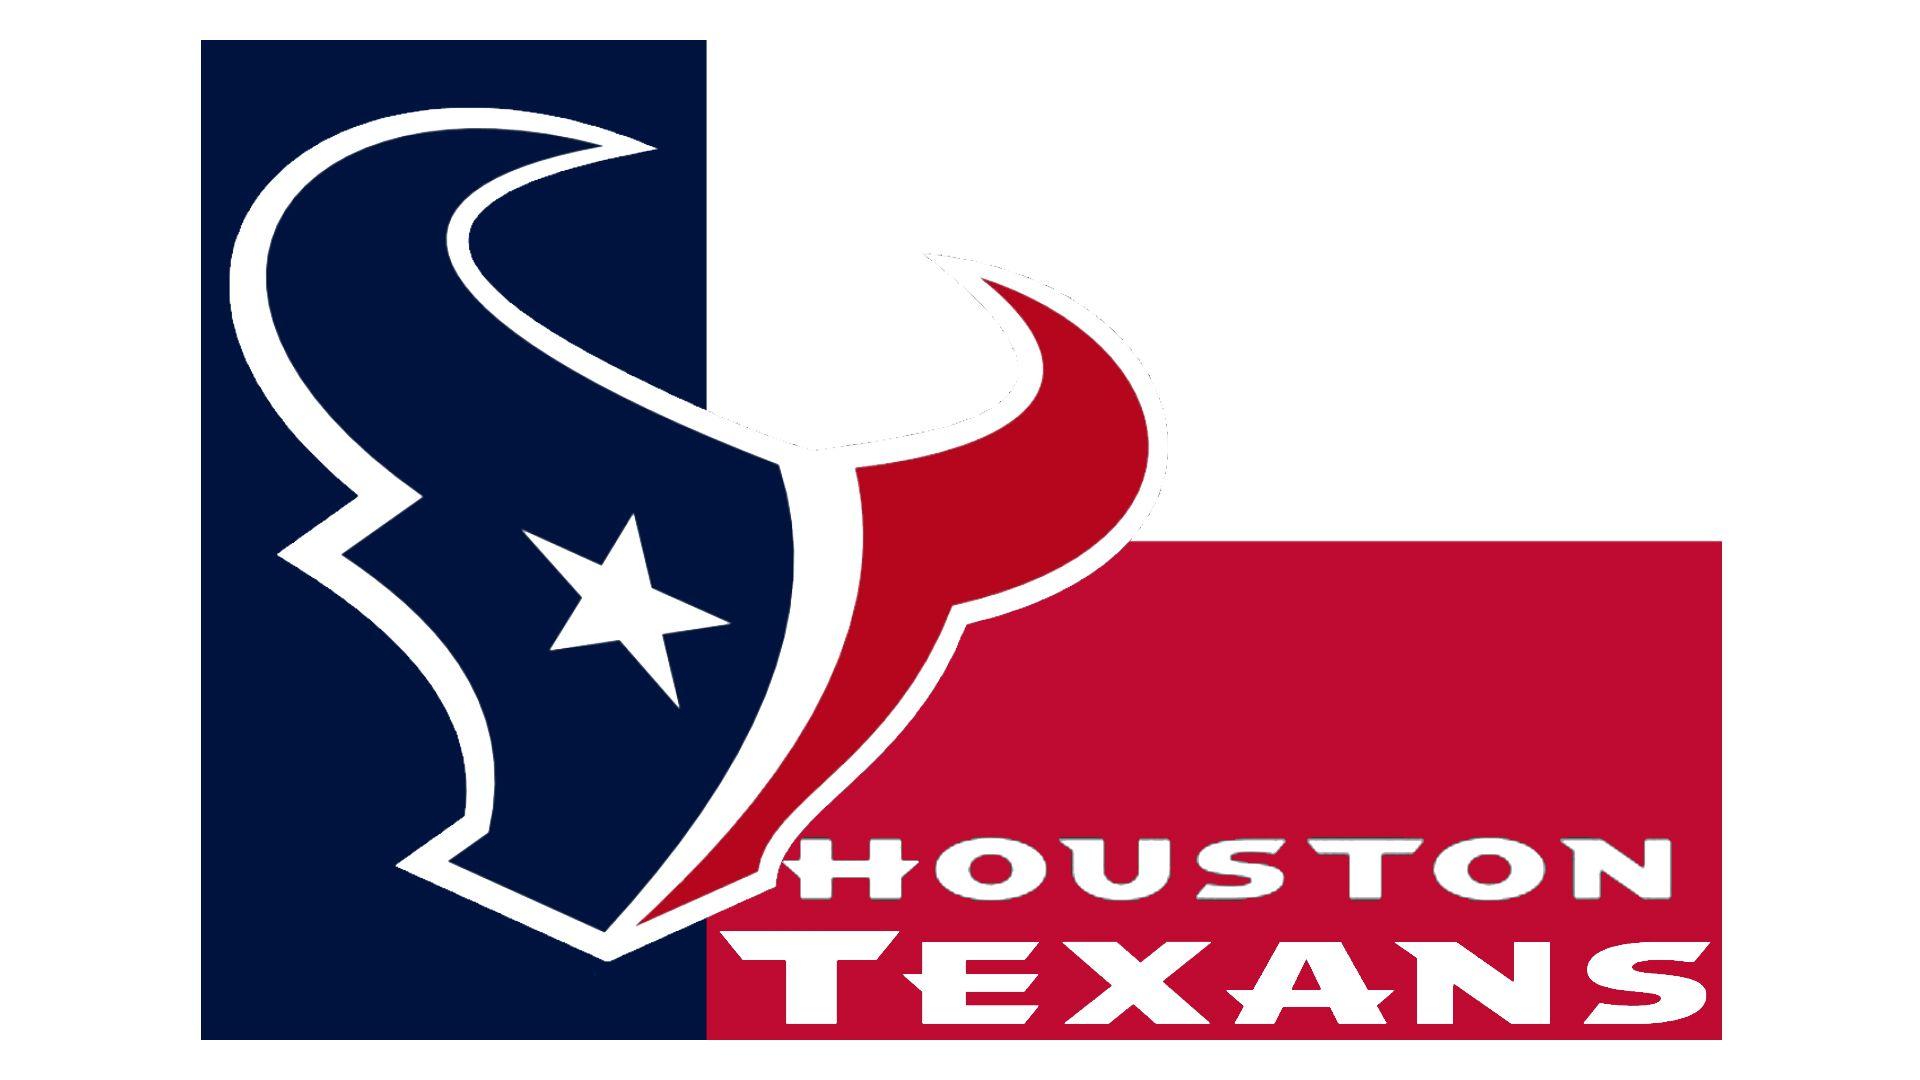 Houston Texans Logo - Texans Logo, Texans Symbol, Meaning, History and Evolution